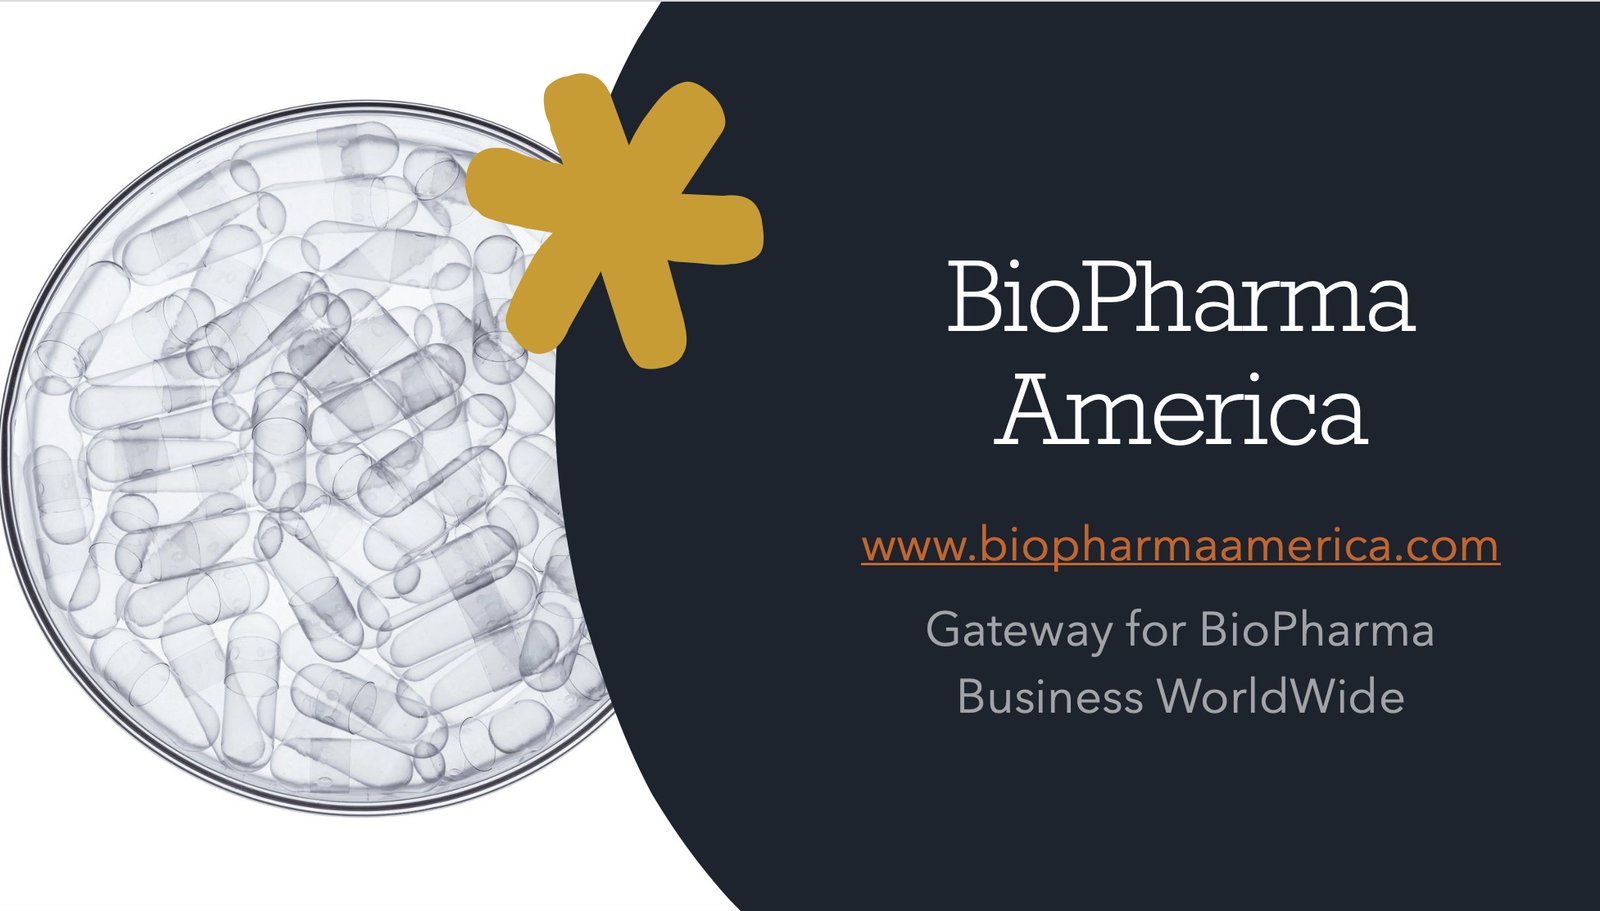 www.biopharmaamerica.com